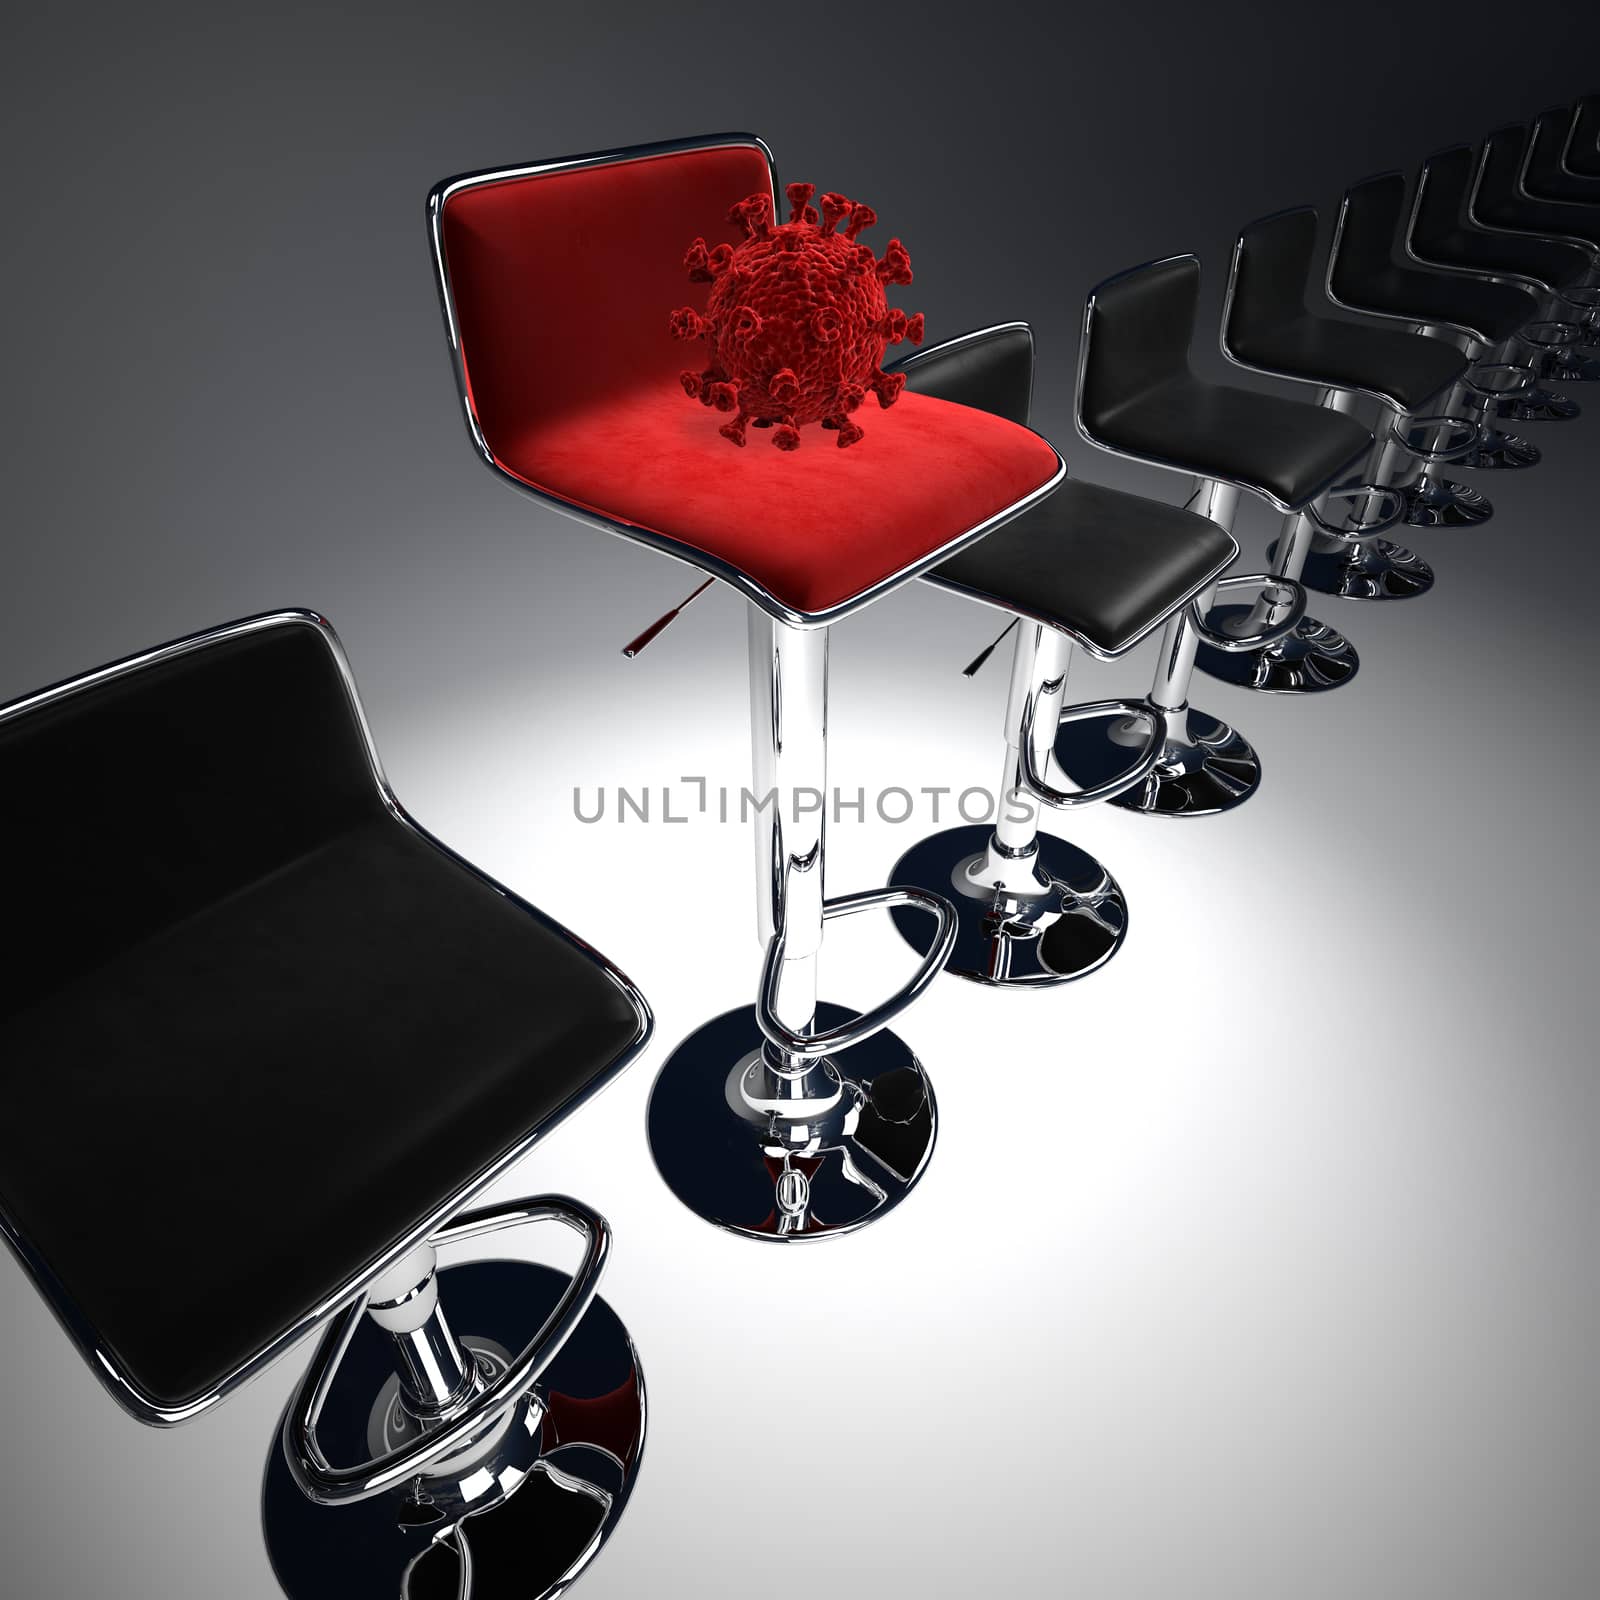 An illustration showing a coronavirus on a high red bar stool. 3D illustration